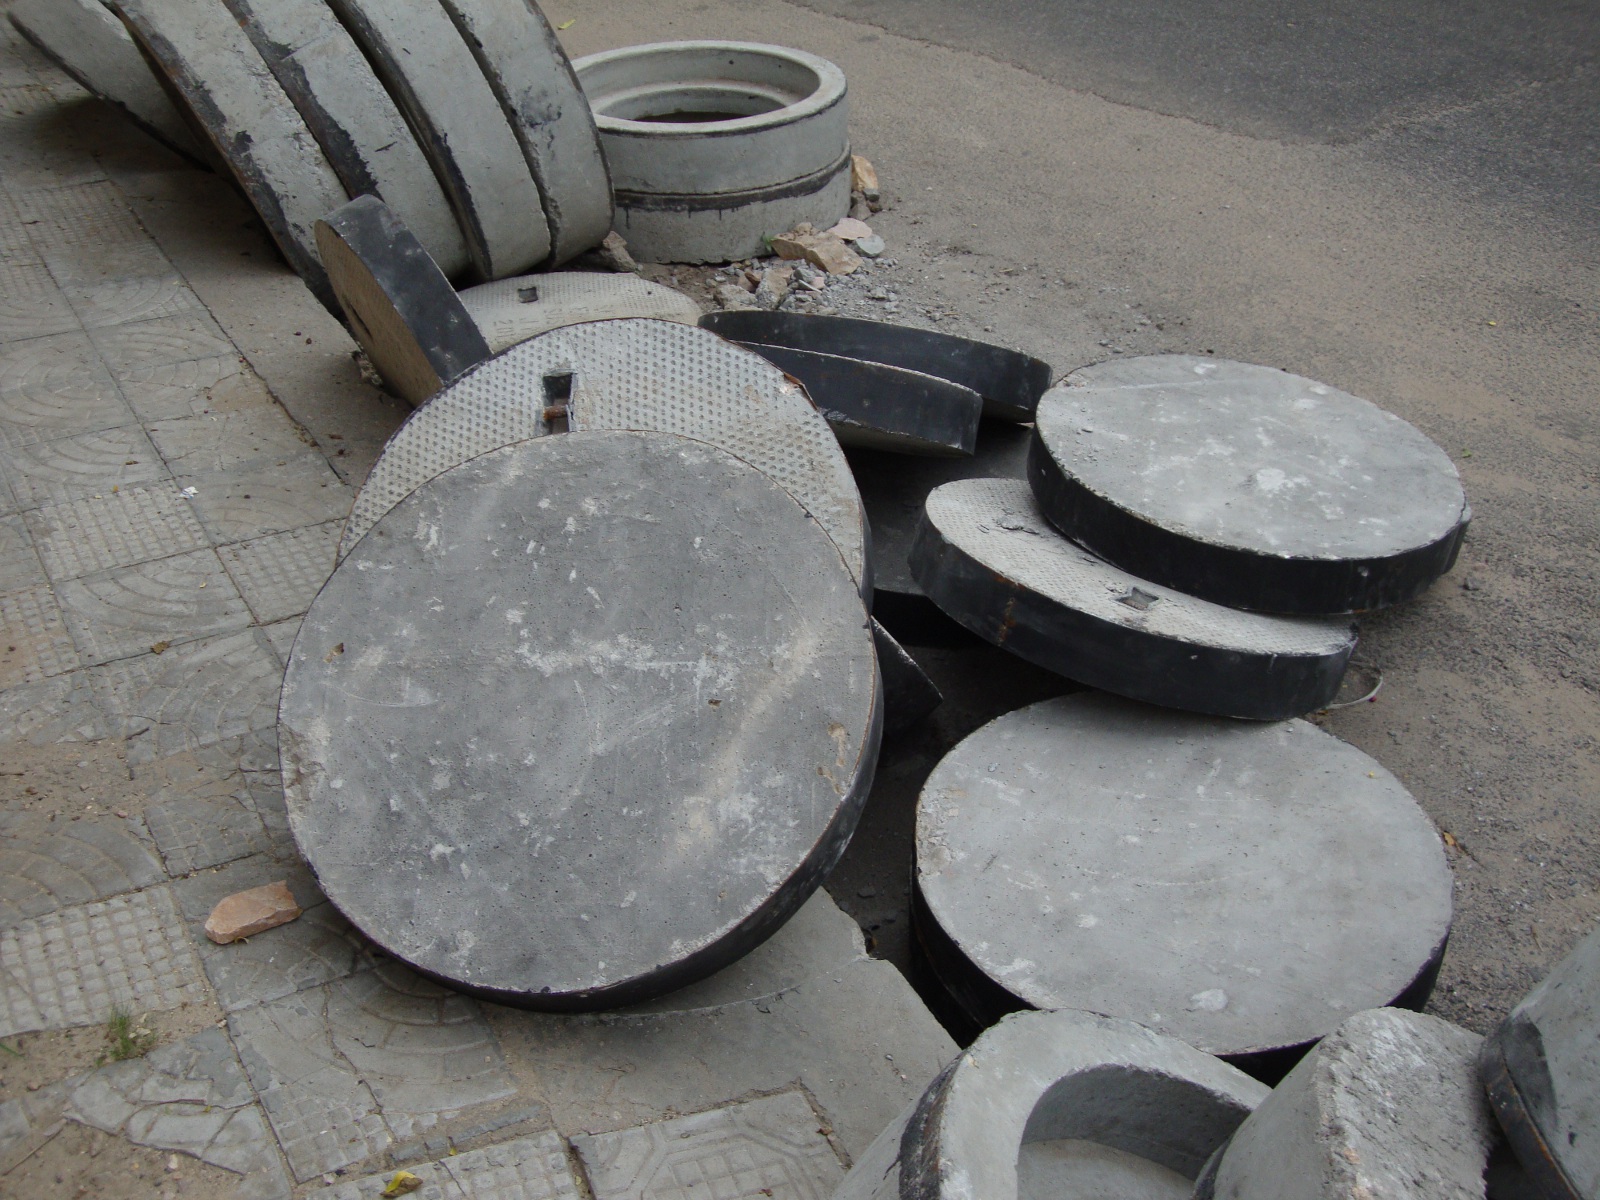 Concrete manhole covers in India.